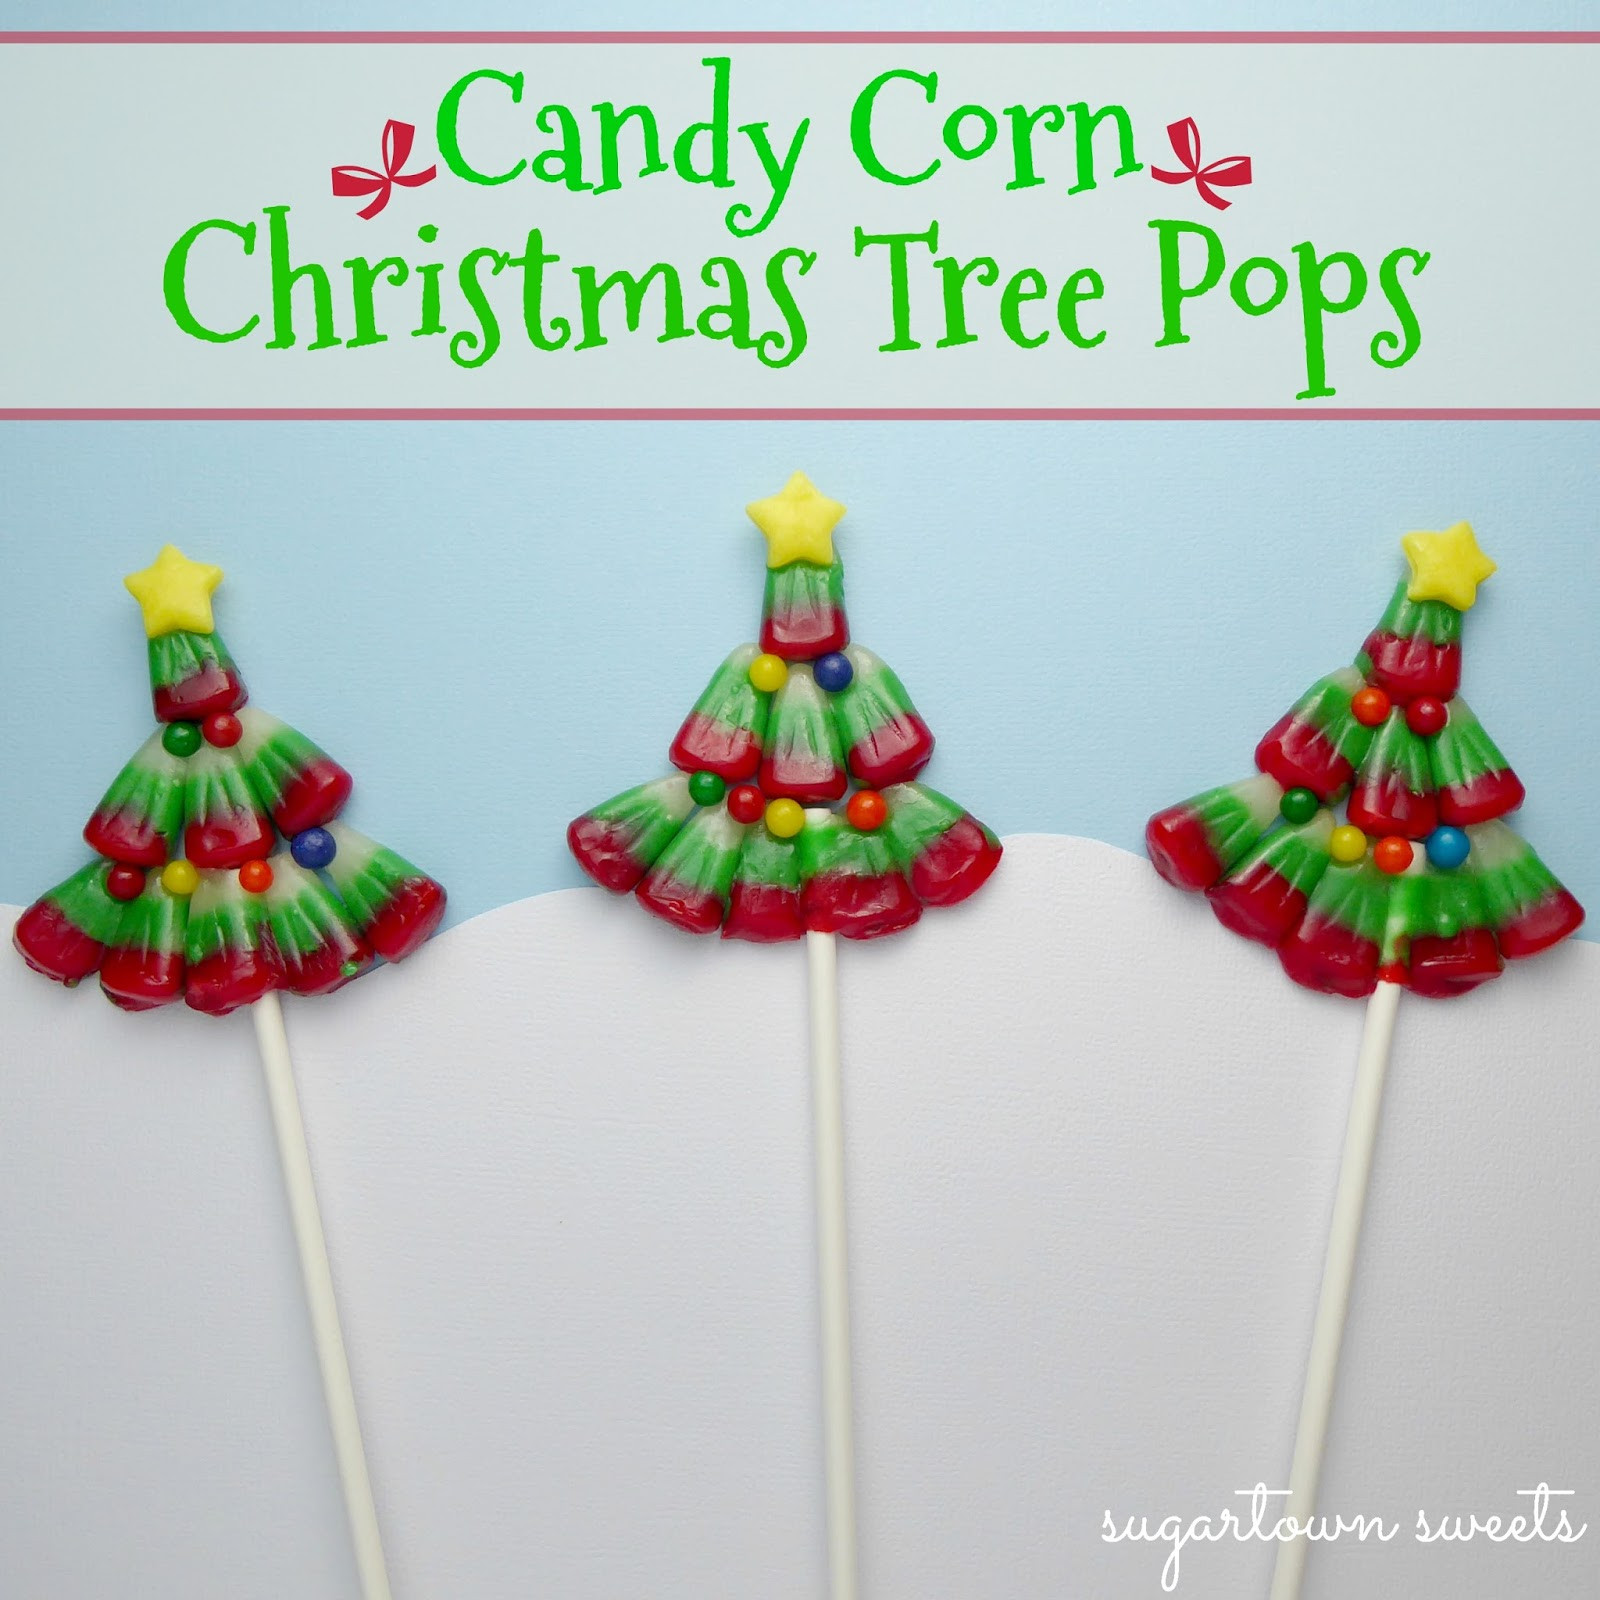 Candy Corn Christmas Tree
 Sugartown Sweets Candy Corn Christmas Tree Pops